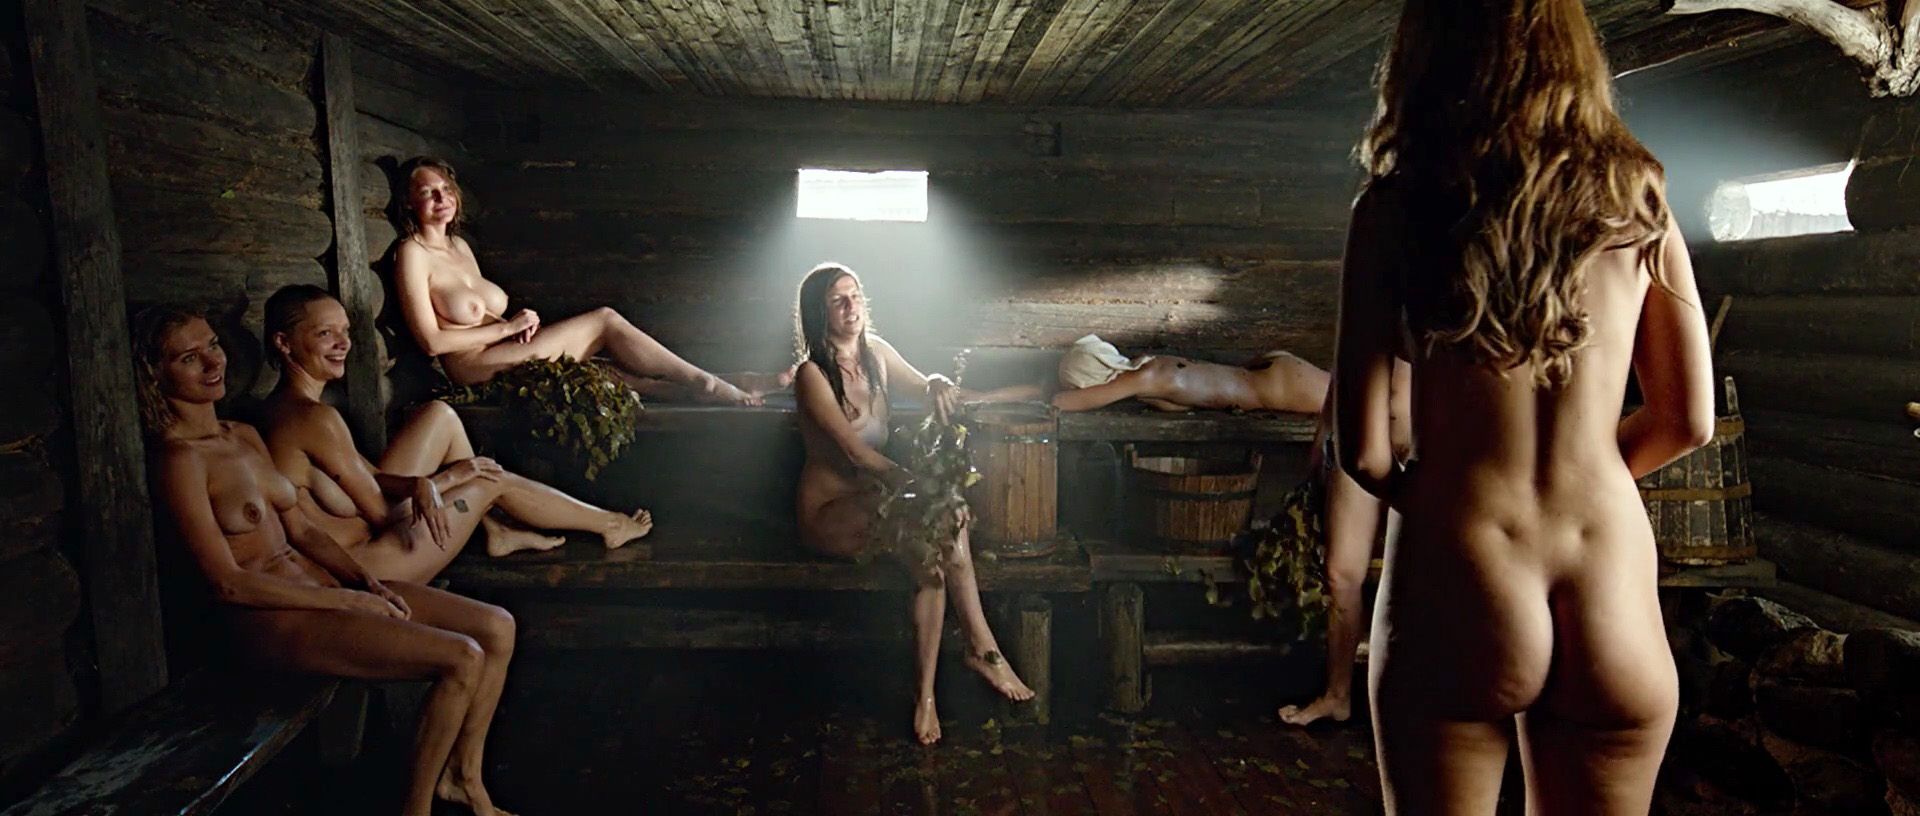 Kristina Asmus, Evgeniya Malakhova, etc Full Frontal Nude (14 Pics + Video)